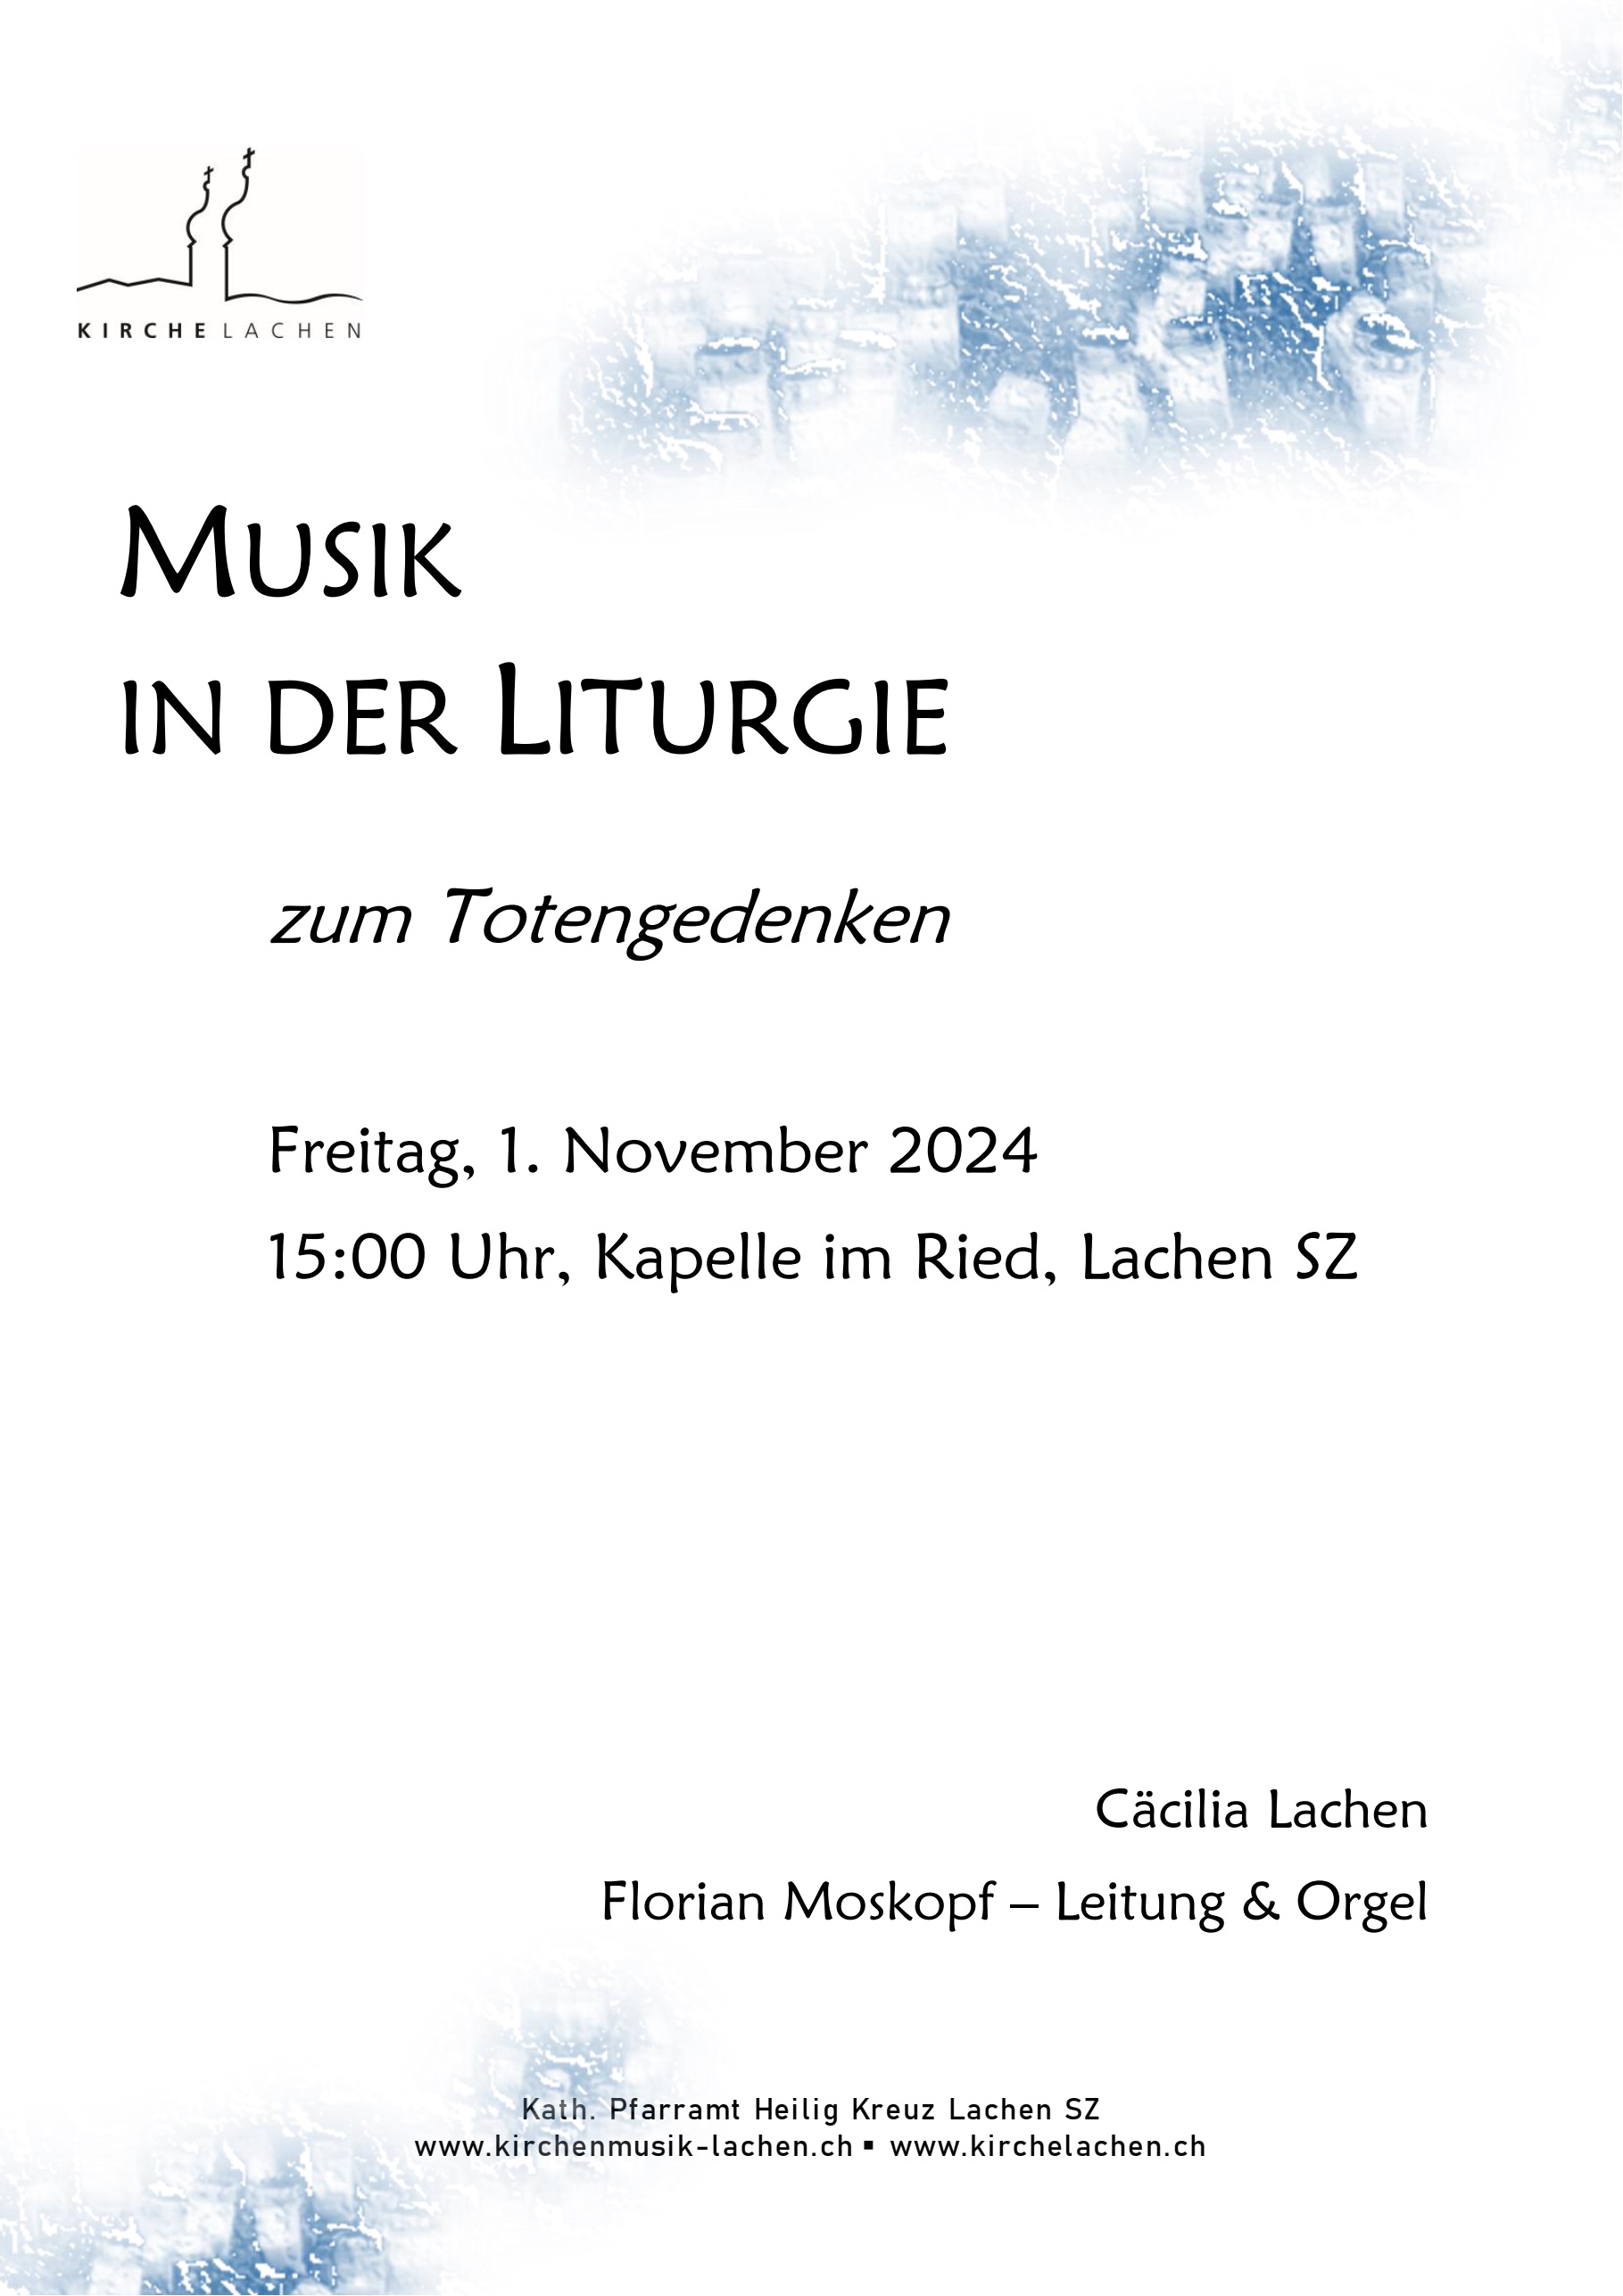 (c) Kirchenmusik-lachen.ch